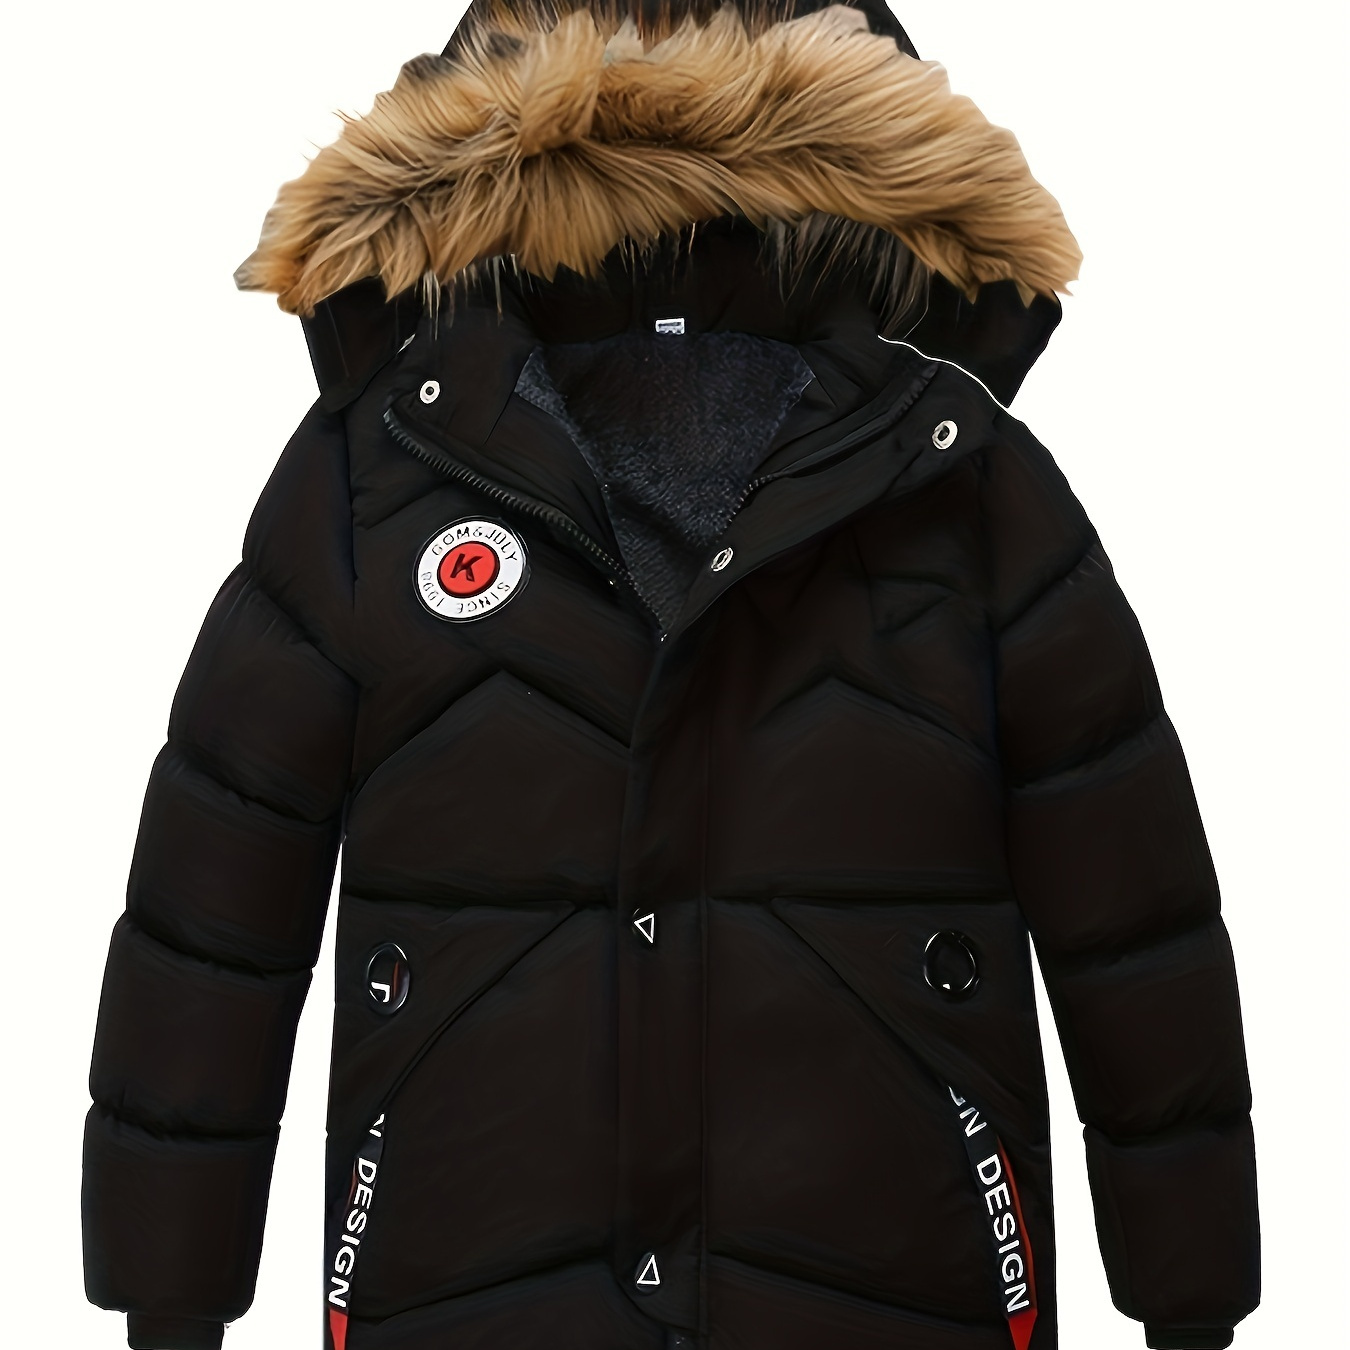 

Kid's Trendy Fleece Lining Down Jacket, Warm Zip Up Hooded Coat, Boy's Clothes For Winter Outdoor, As Gift